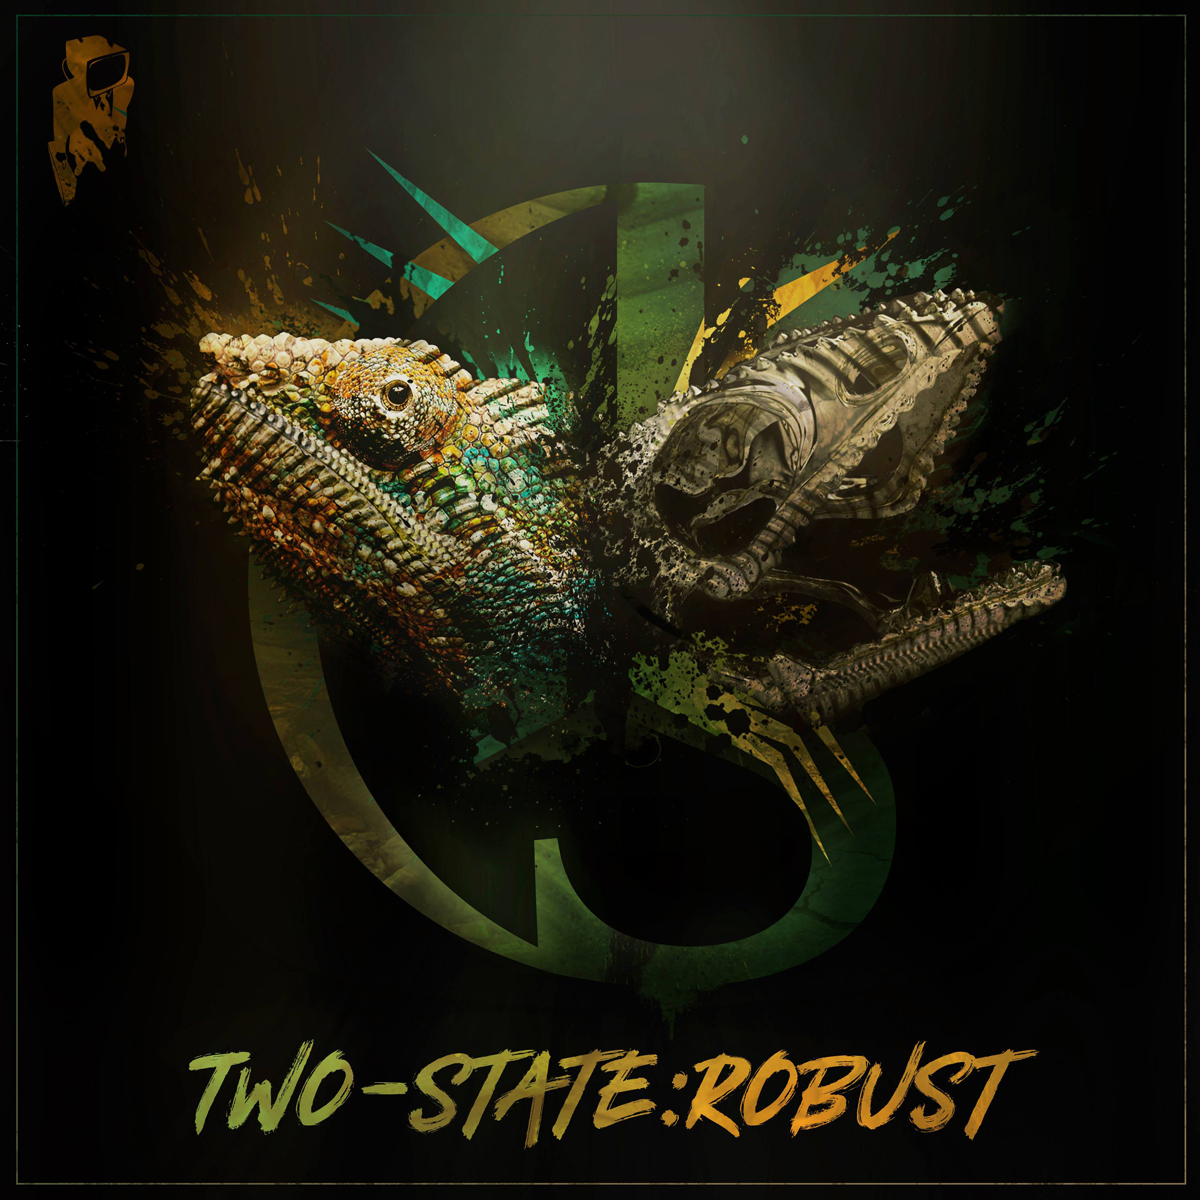 UbuntuFM Hip-Hop | Two-State | "Robust"